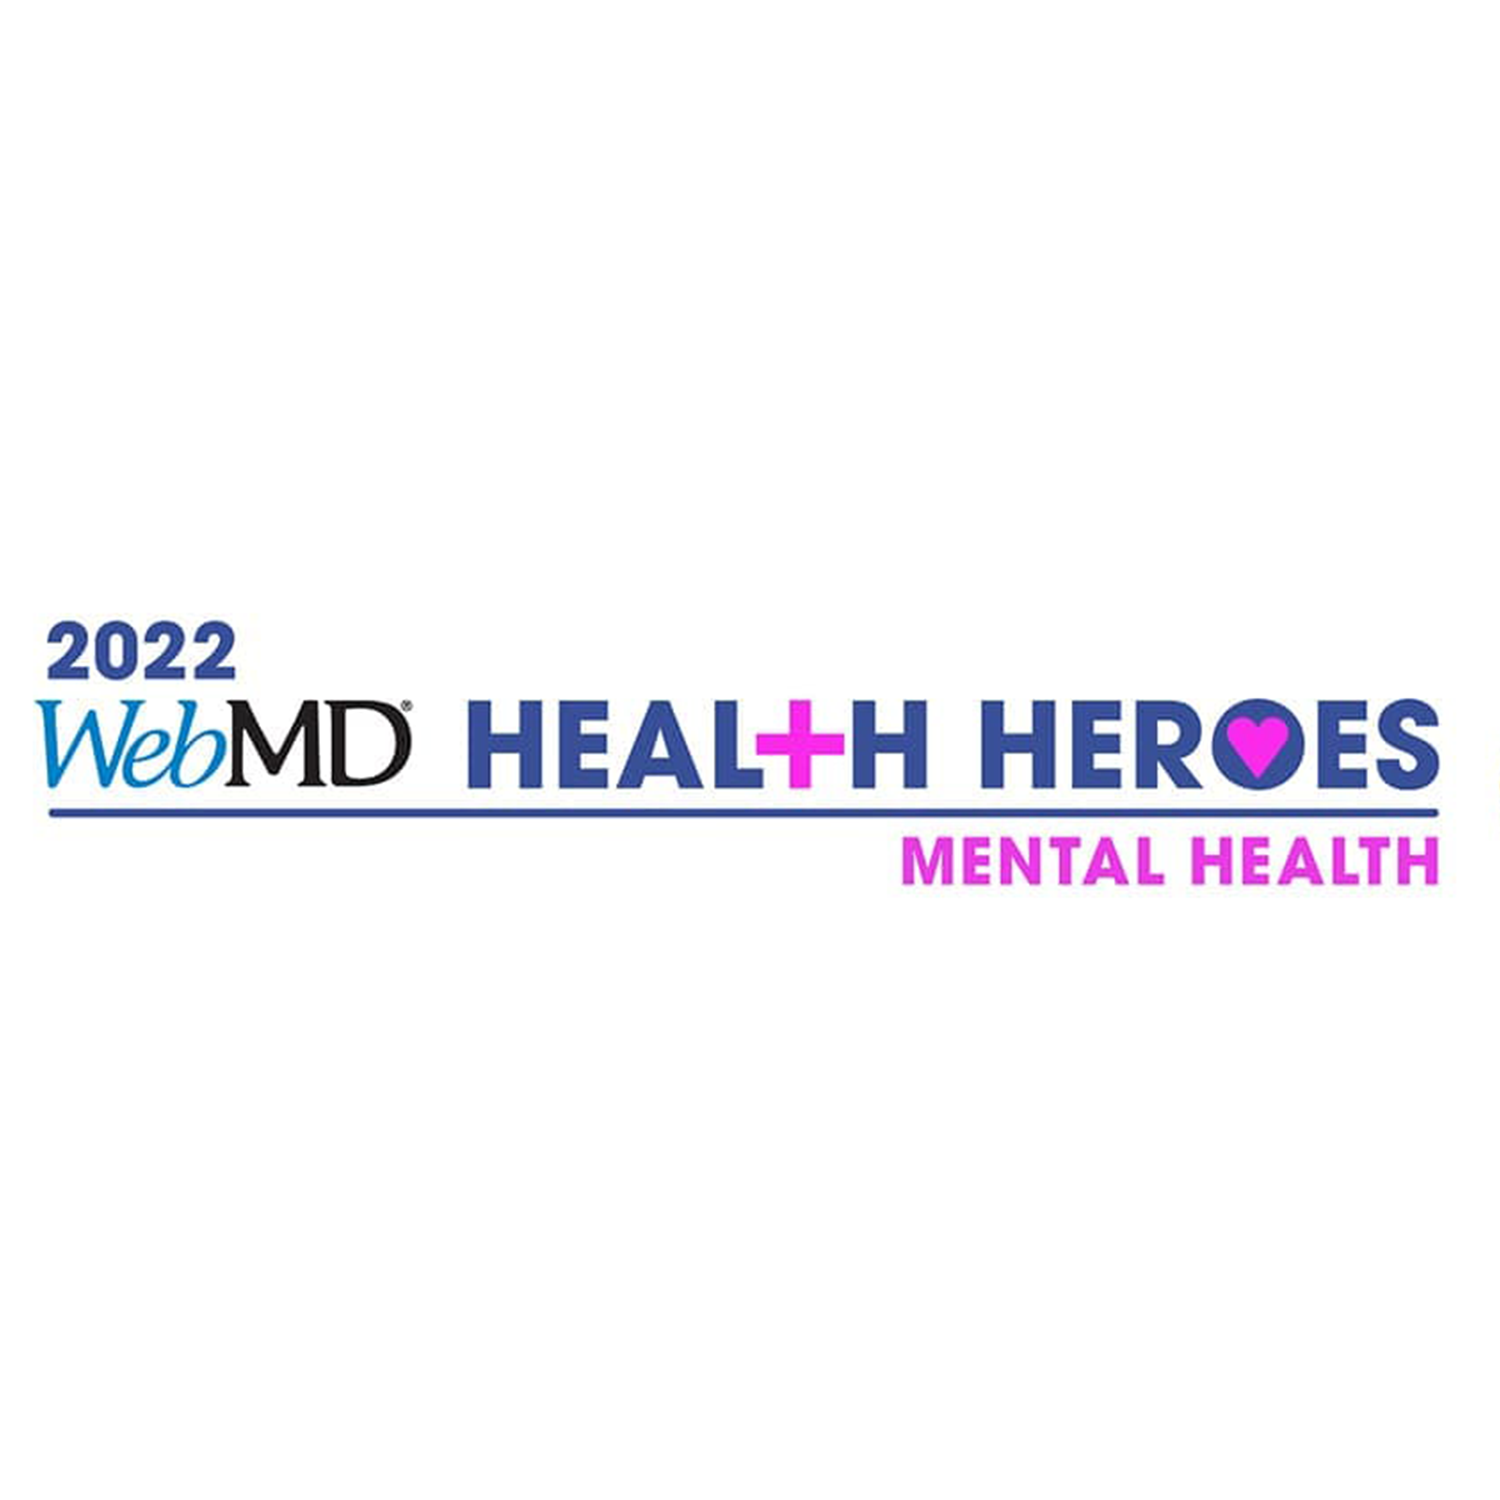 WebMD Health Heroes Mental Health